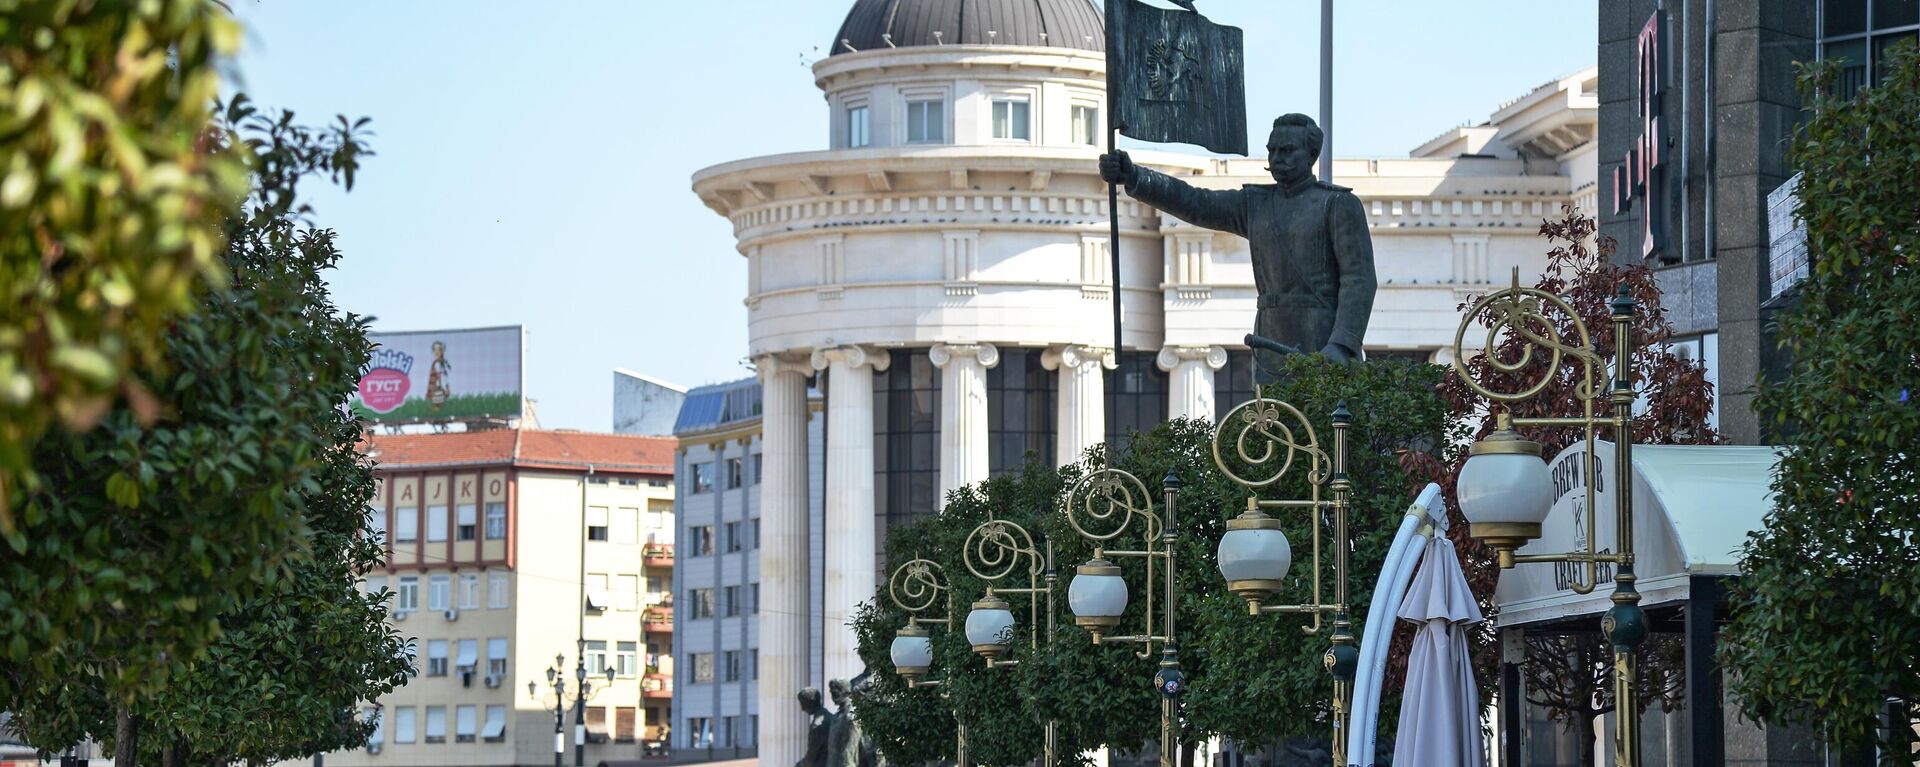 Центр города Скопье - Sputnik Lietuva, 1920, 20.05.2021